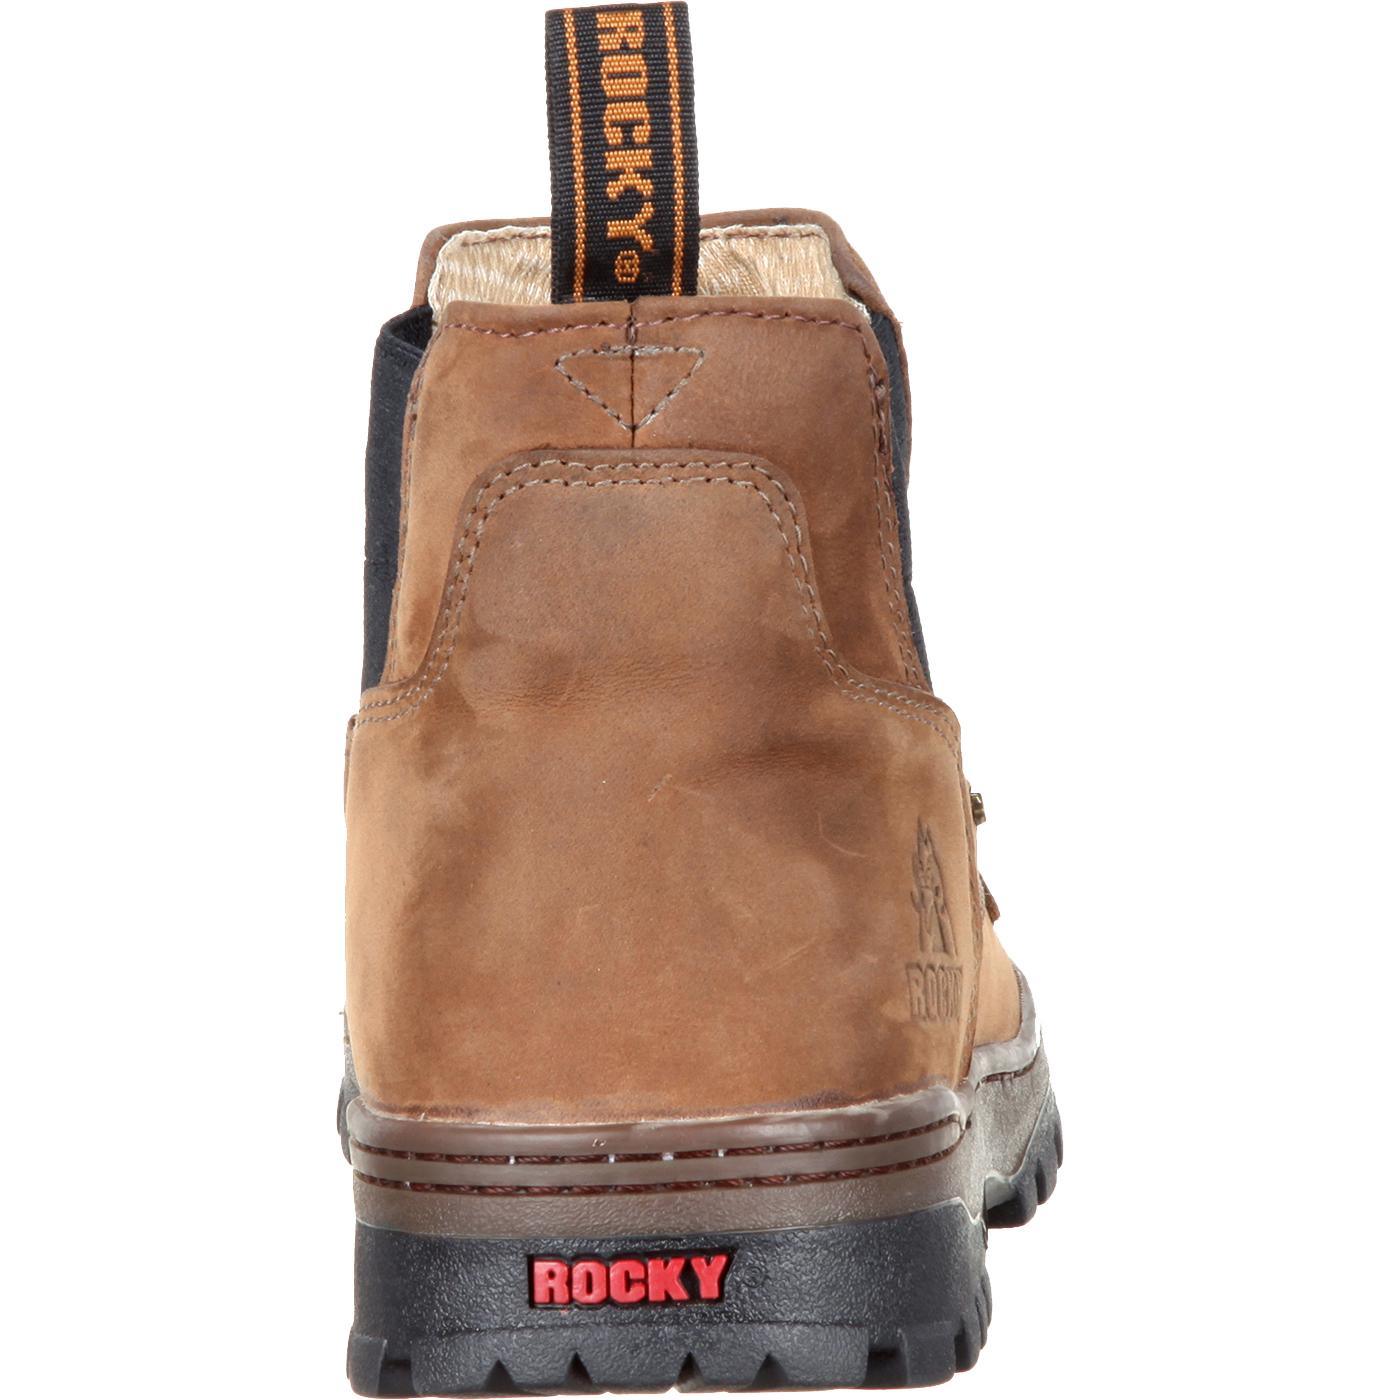 Rocky Outback GORE-TEX® Waterproof Hiker Boot - Flyclothing LLC